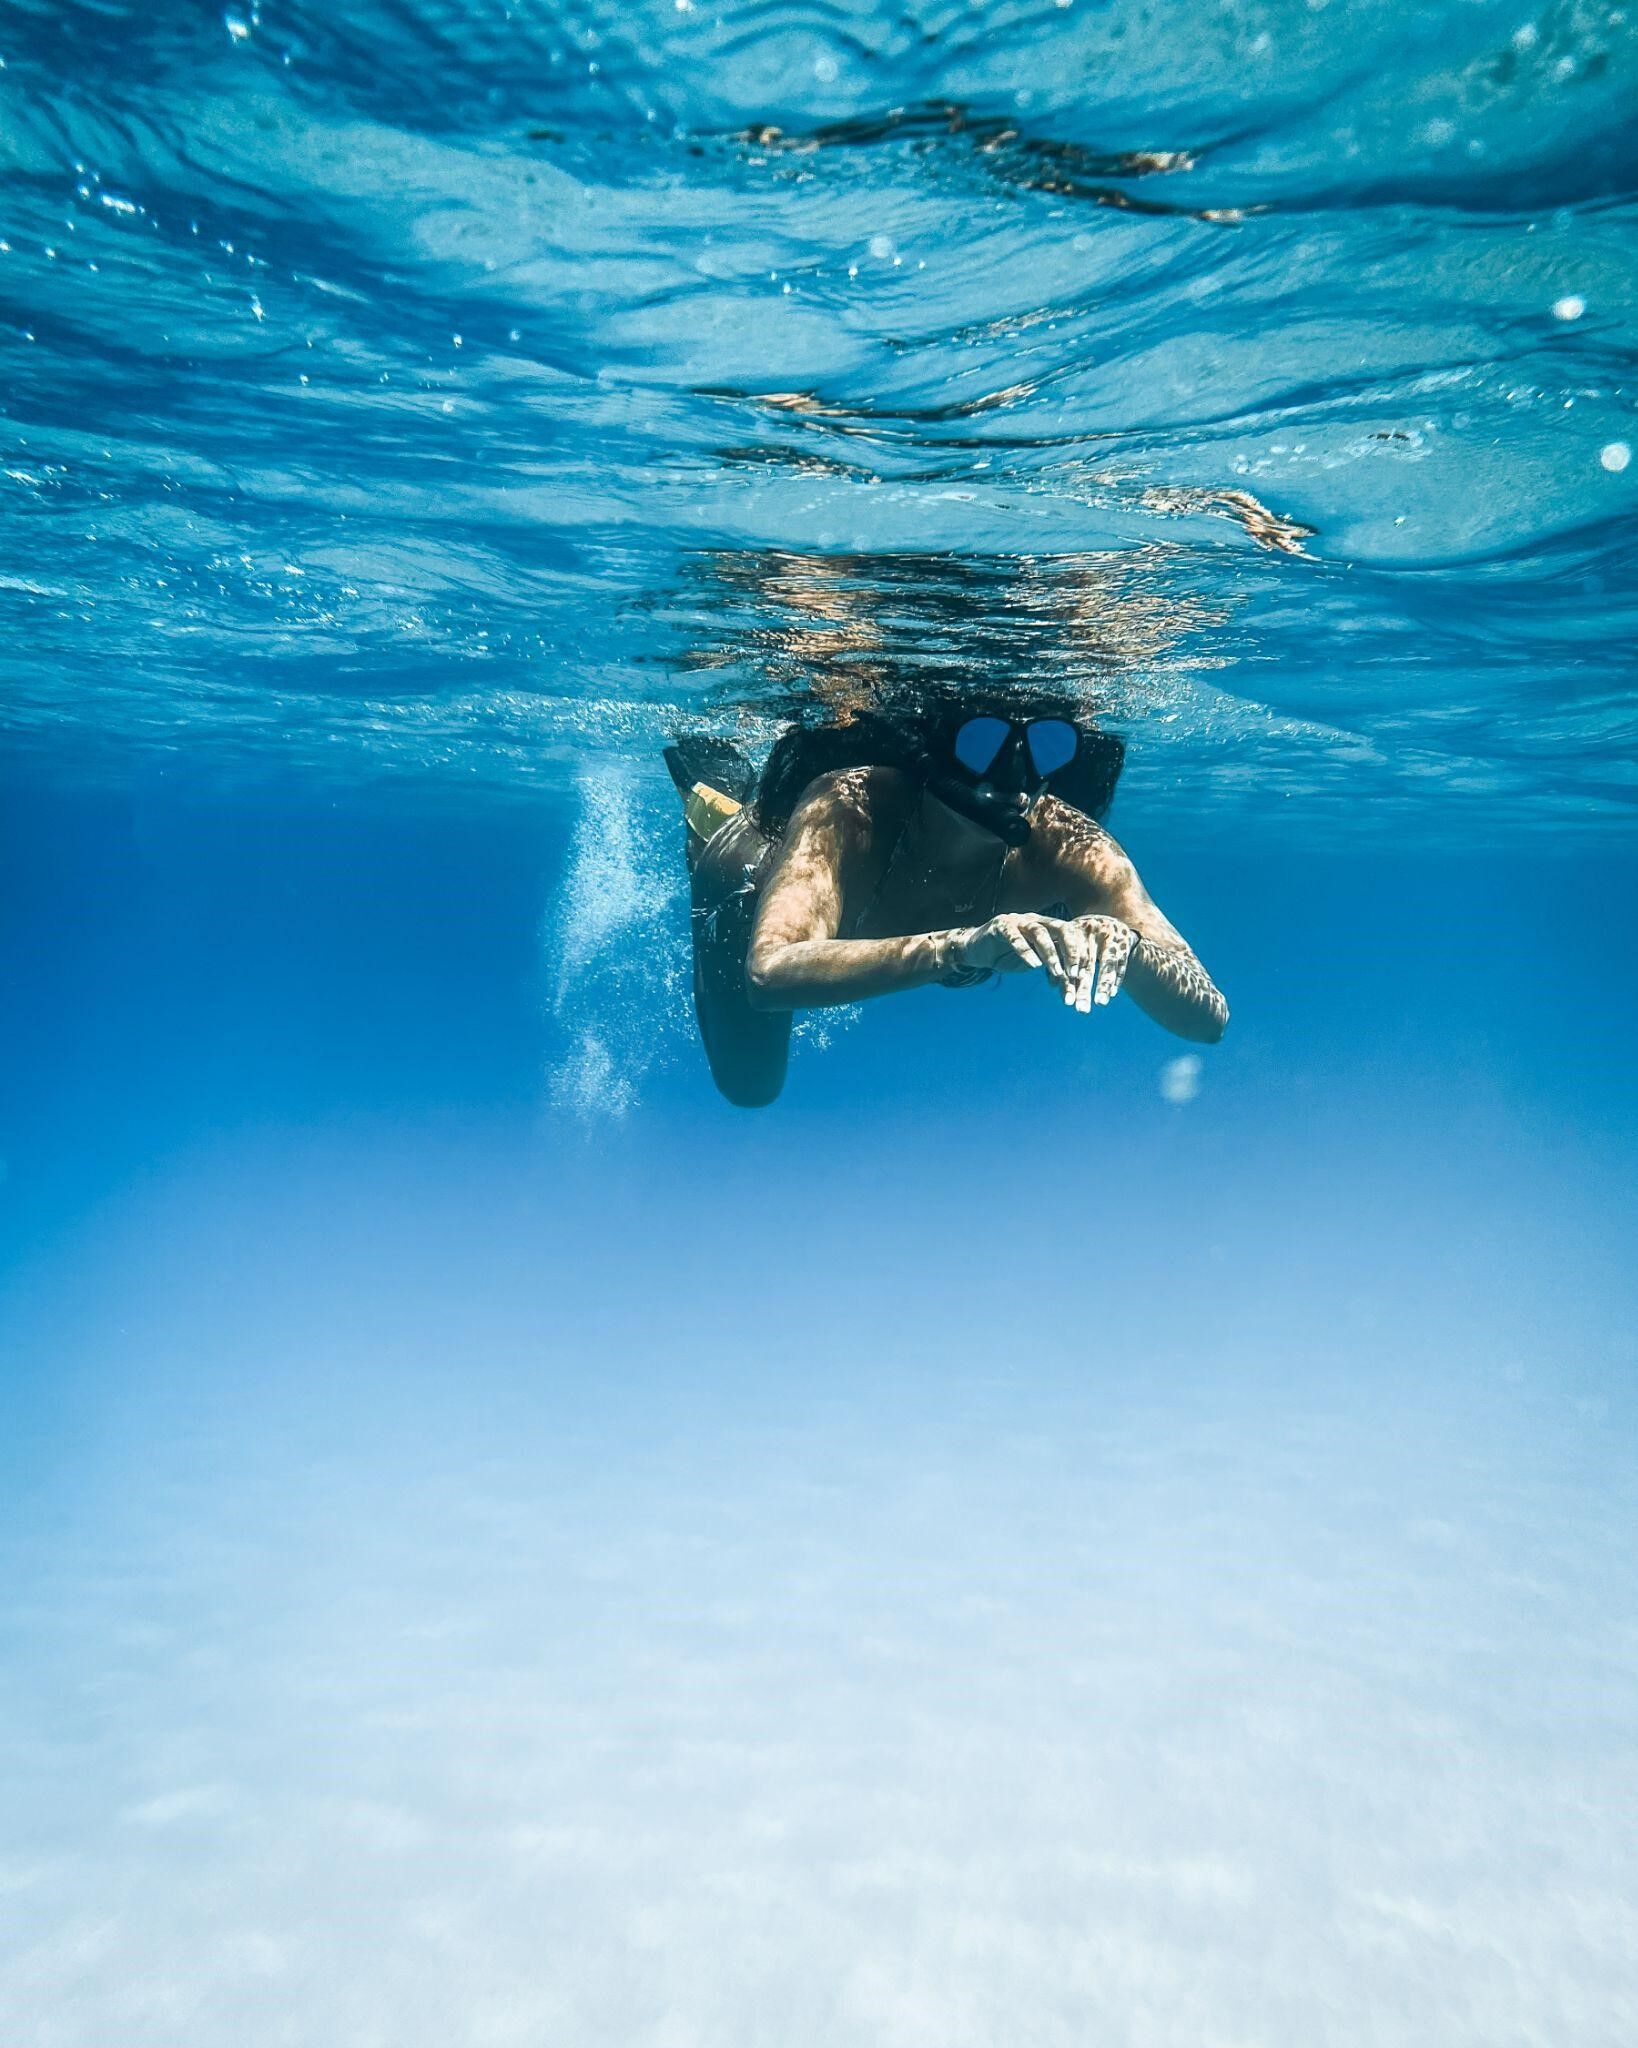 A man snorkling in the ocean